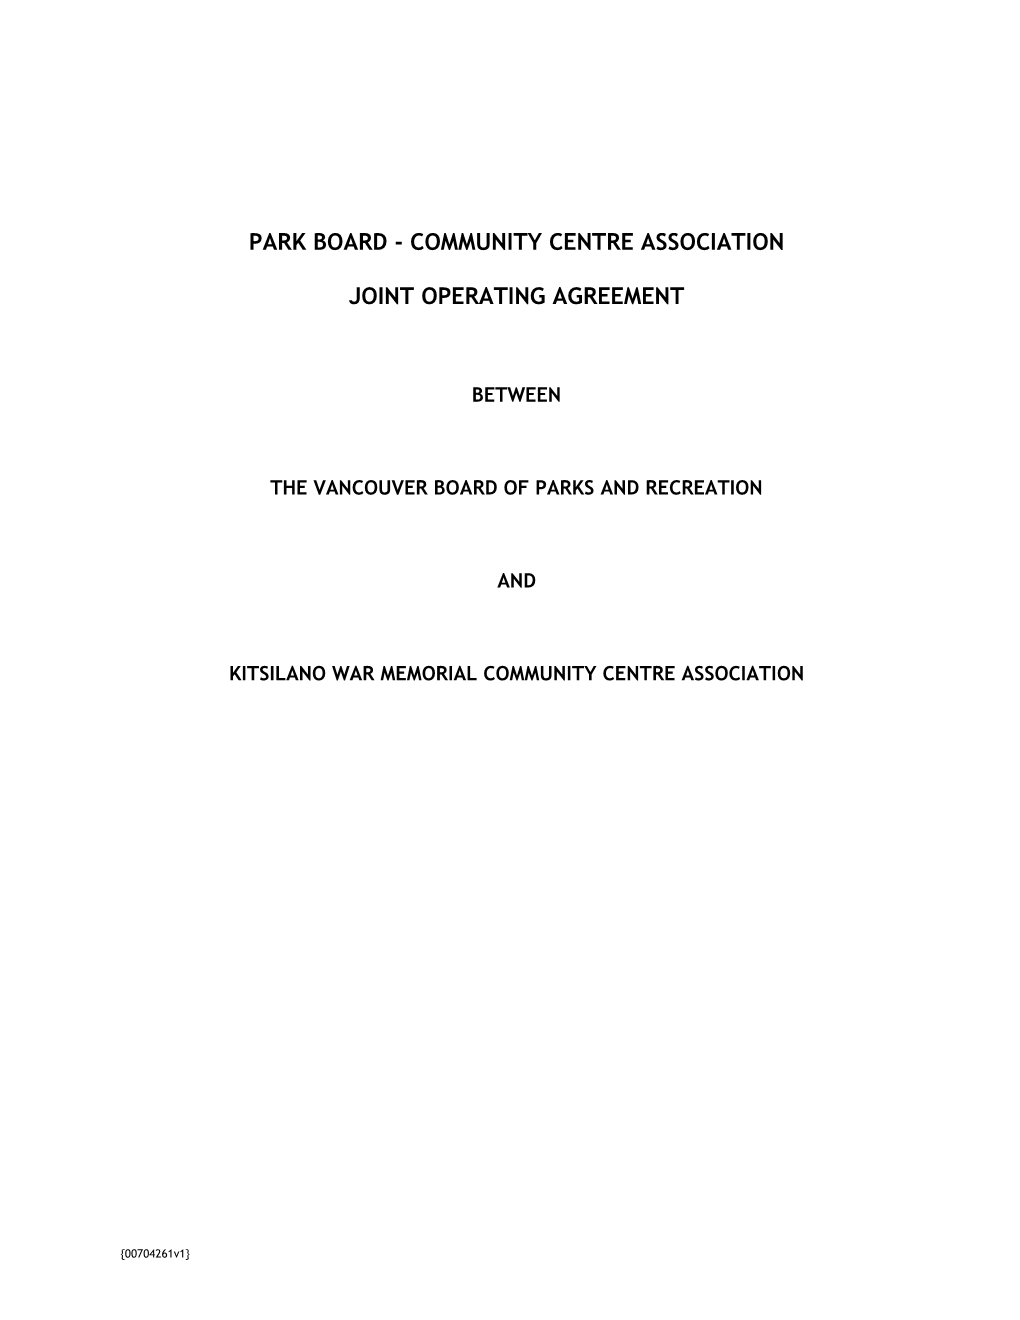 Park Board - Community Centre Association